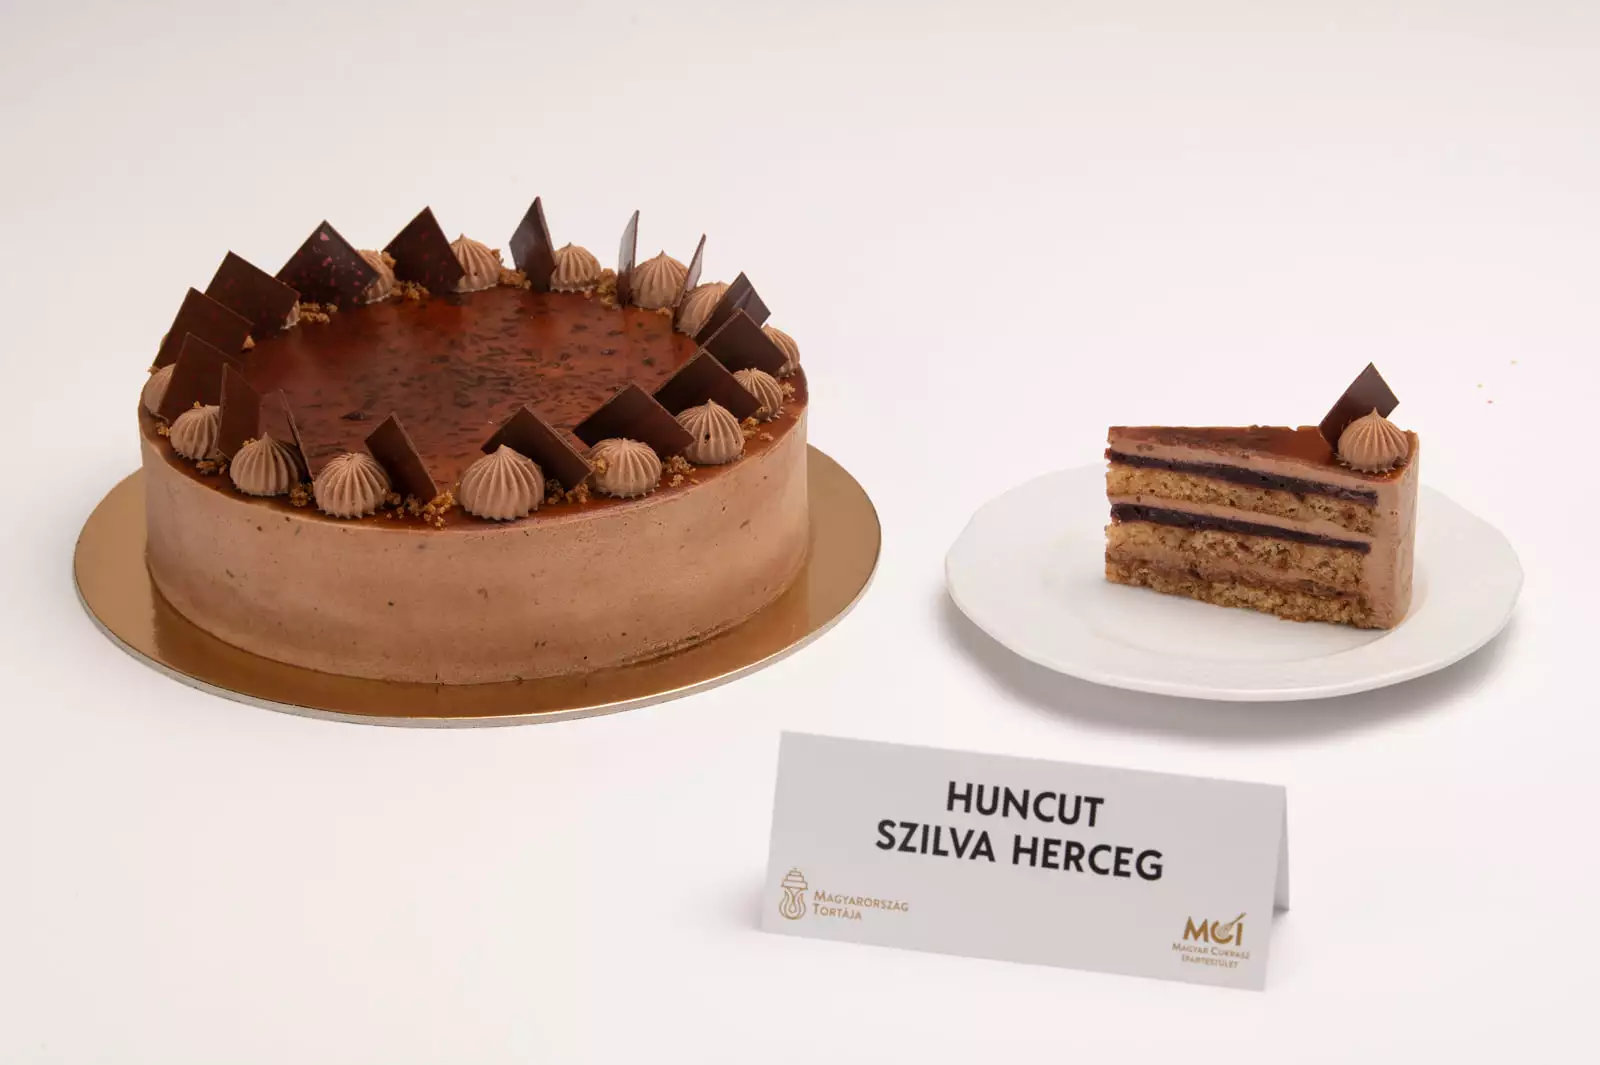 Huncut Szilva Herceg Cake